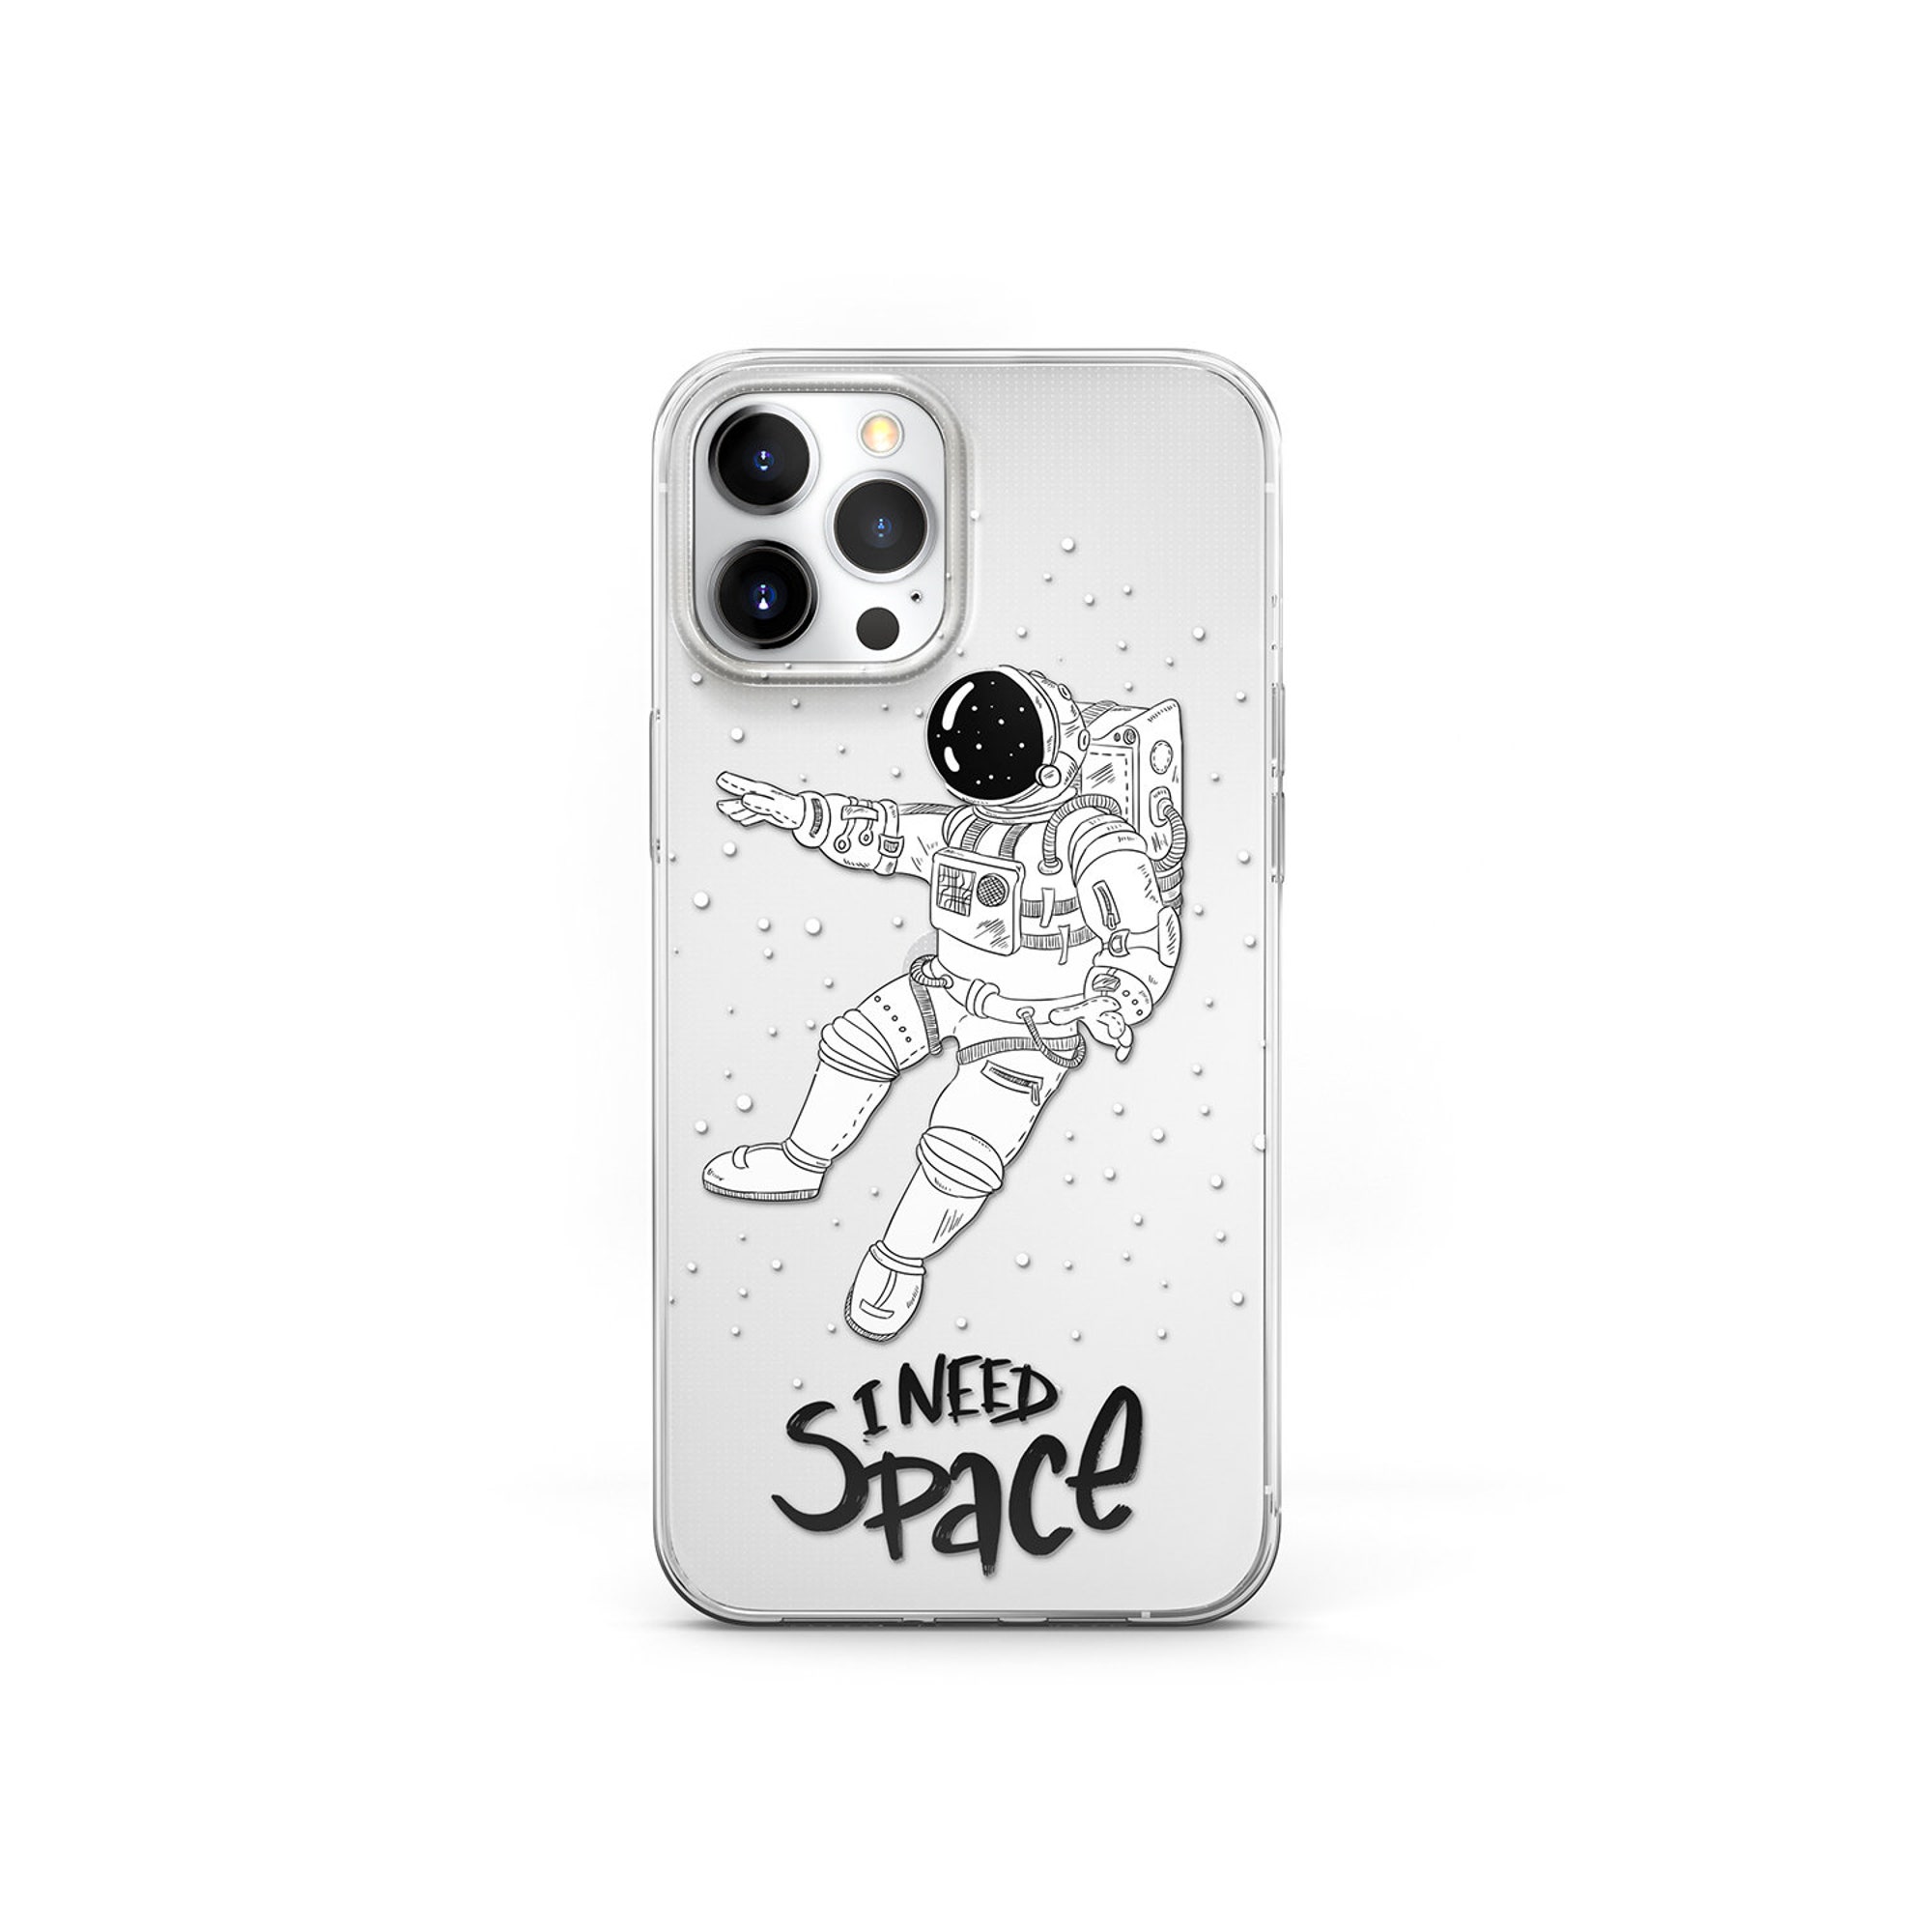 Discover Space iPhone Case Capa De Telemóvel Iphone Astronauta Desenho